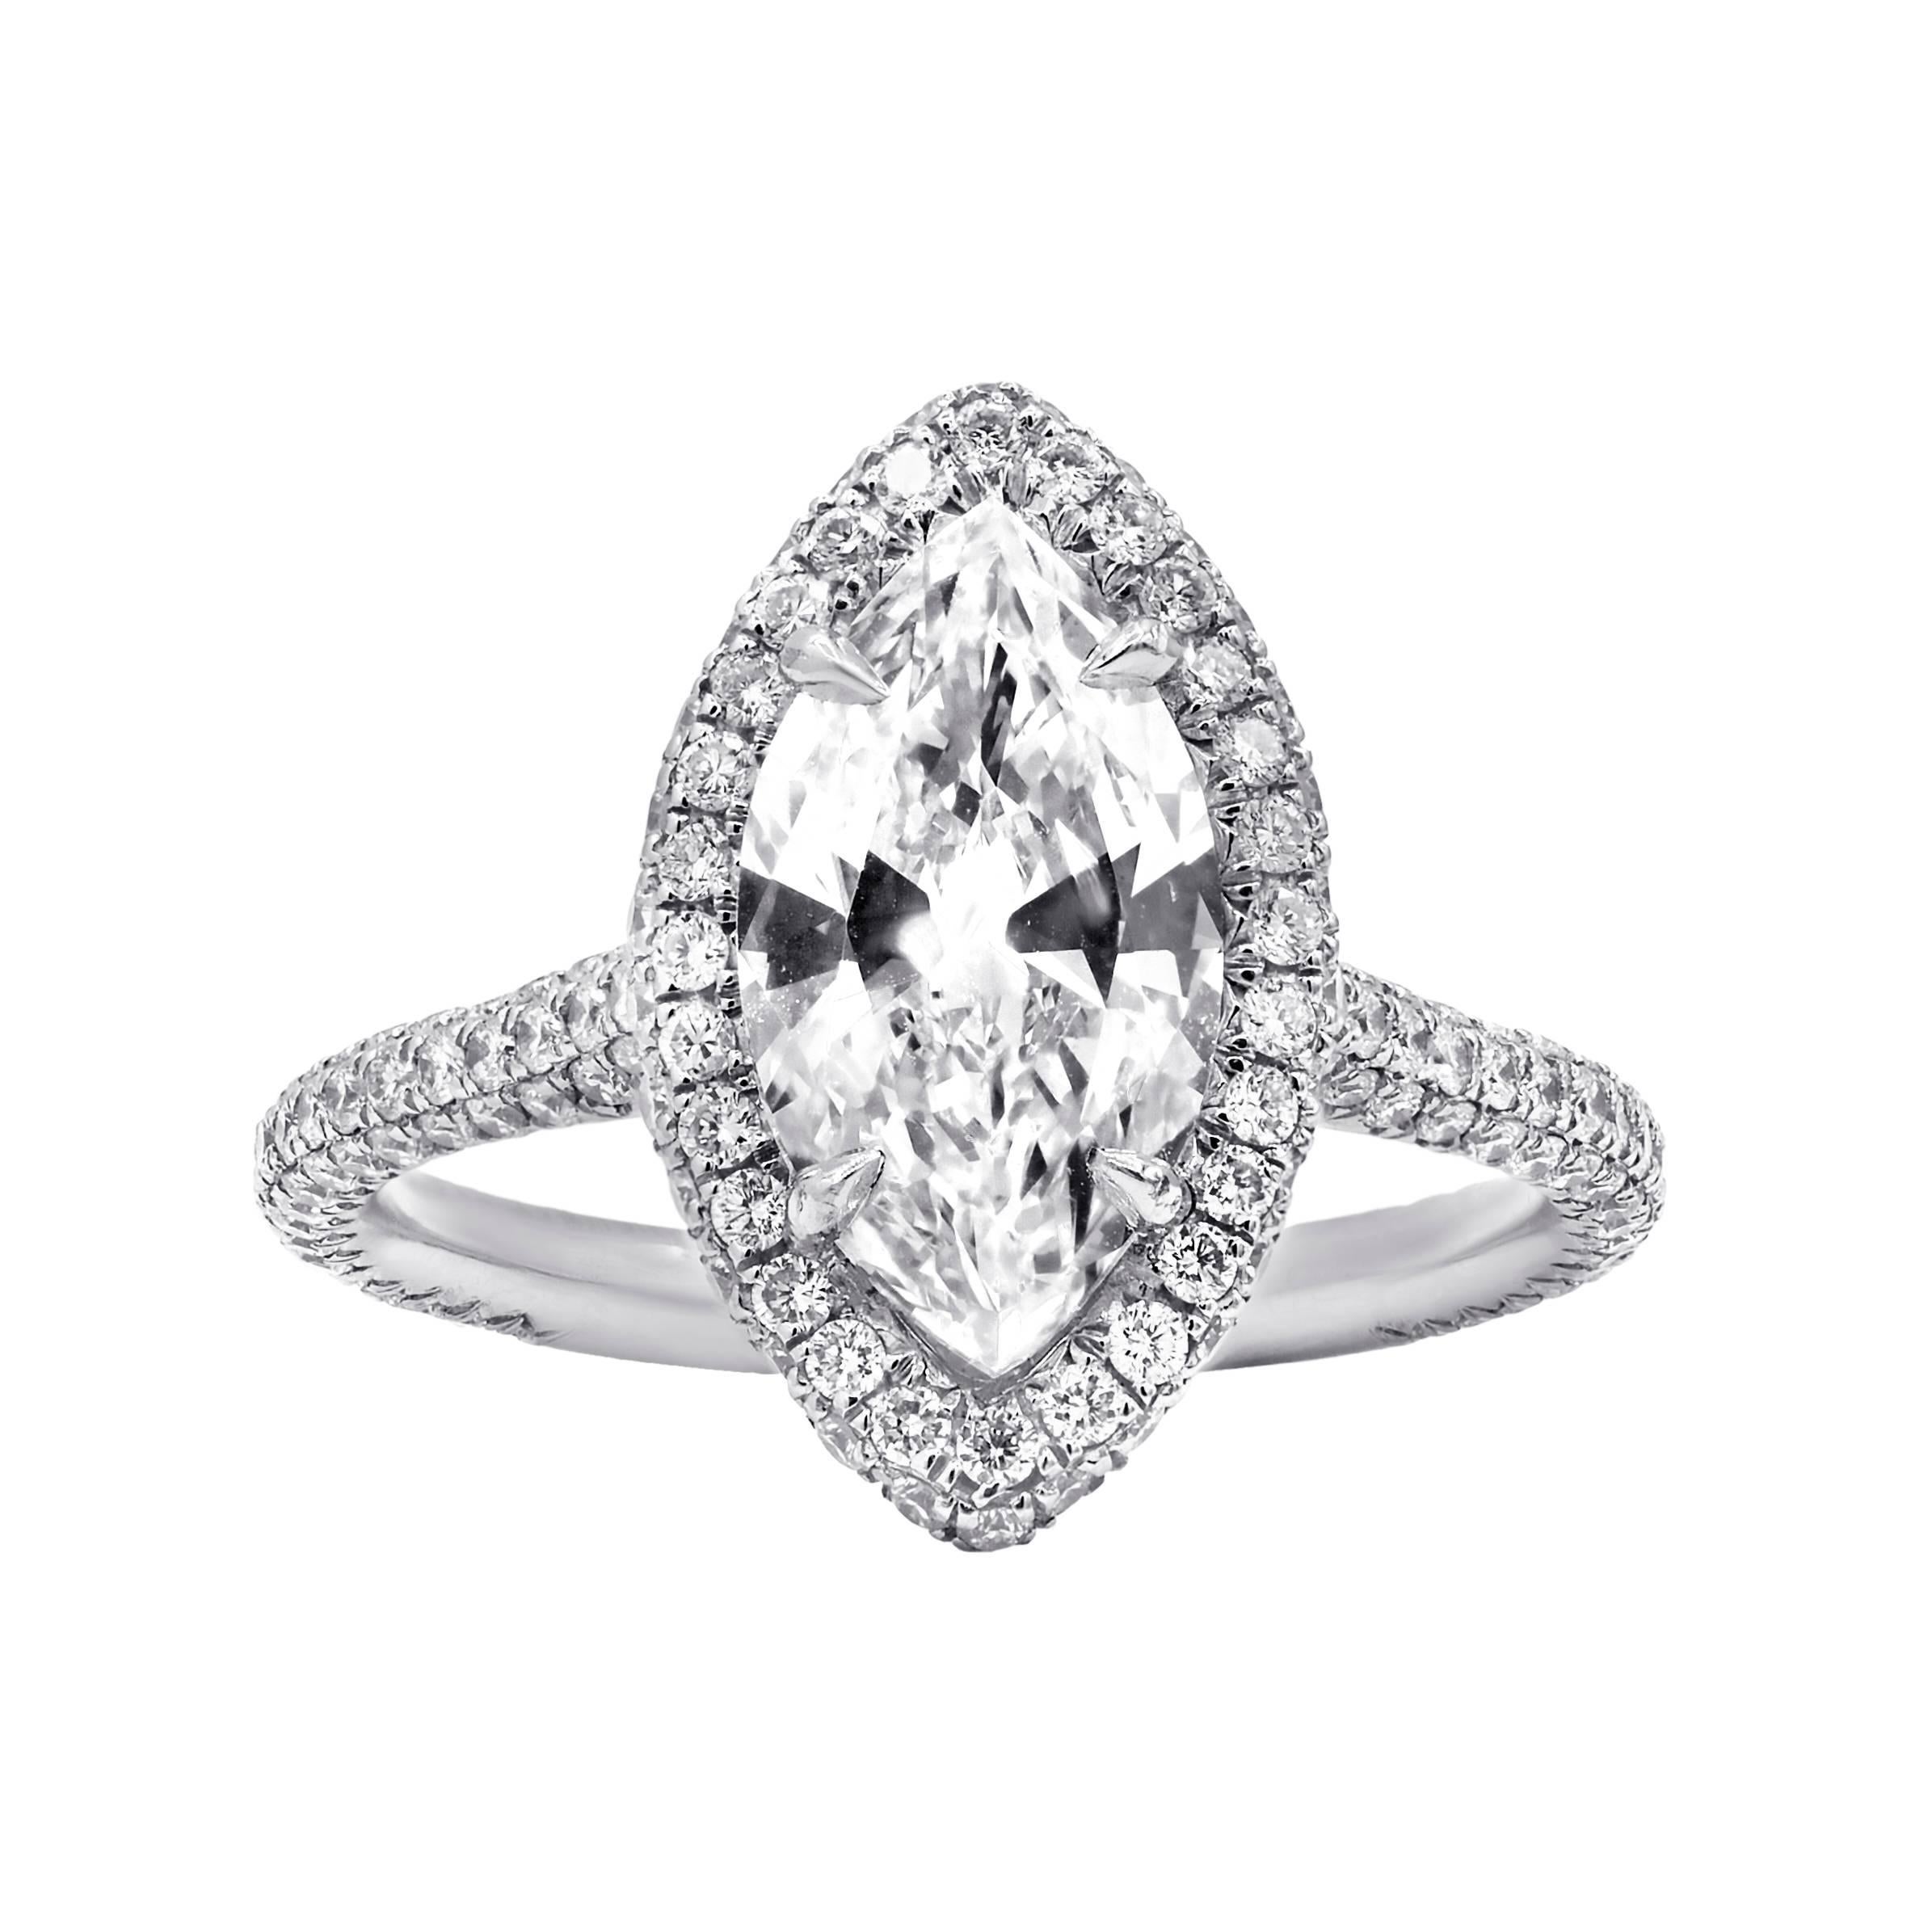 Diana M. Custom 3.26 cts Engagement  Marquise Cut Diamond Ring